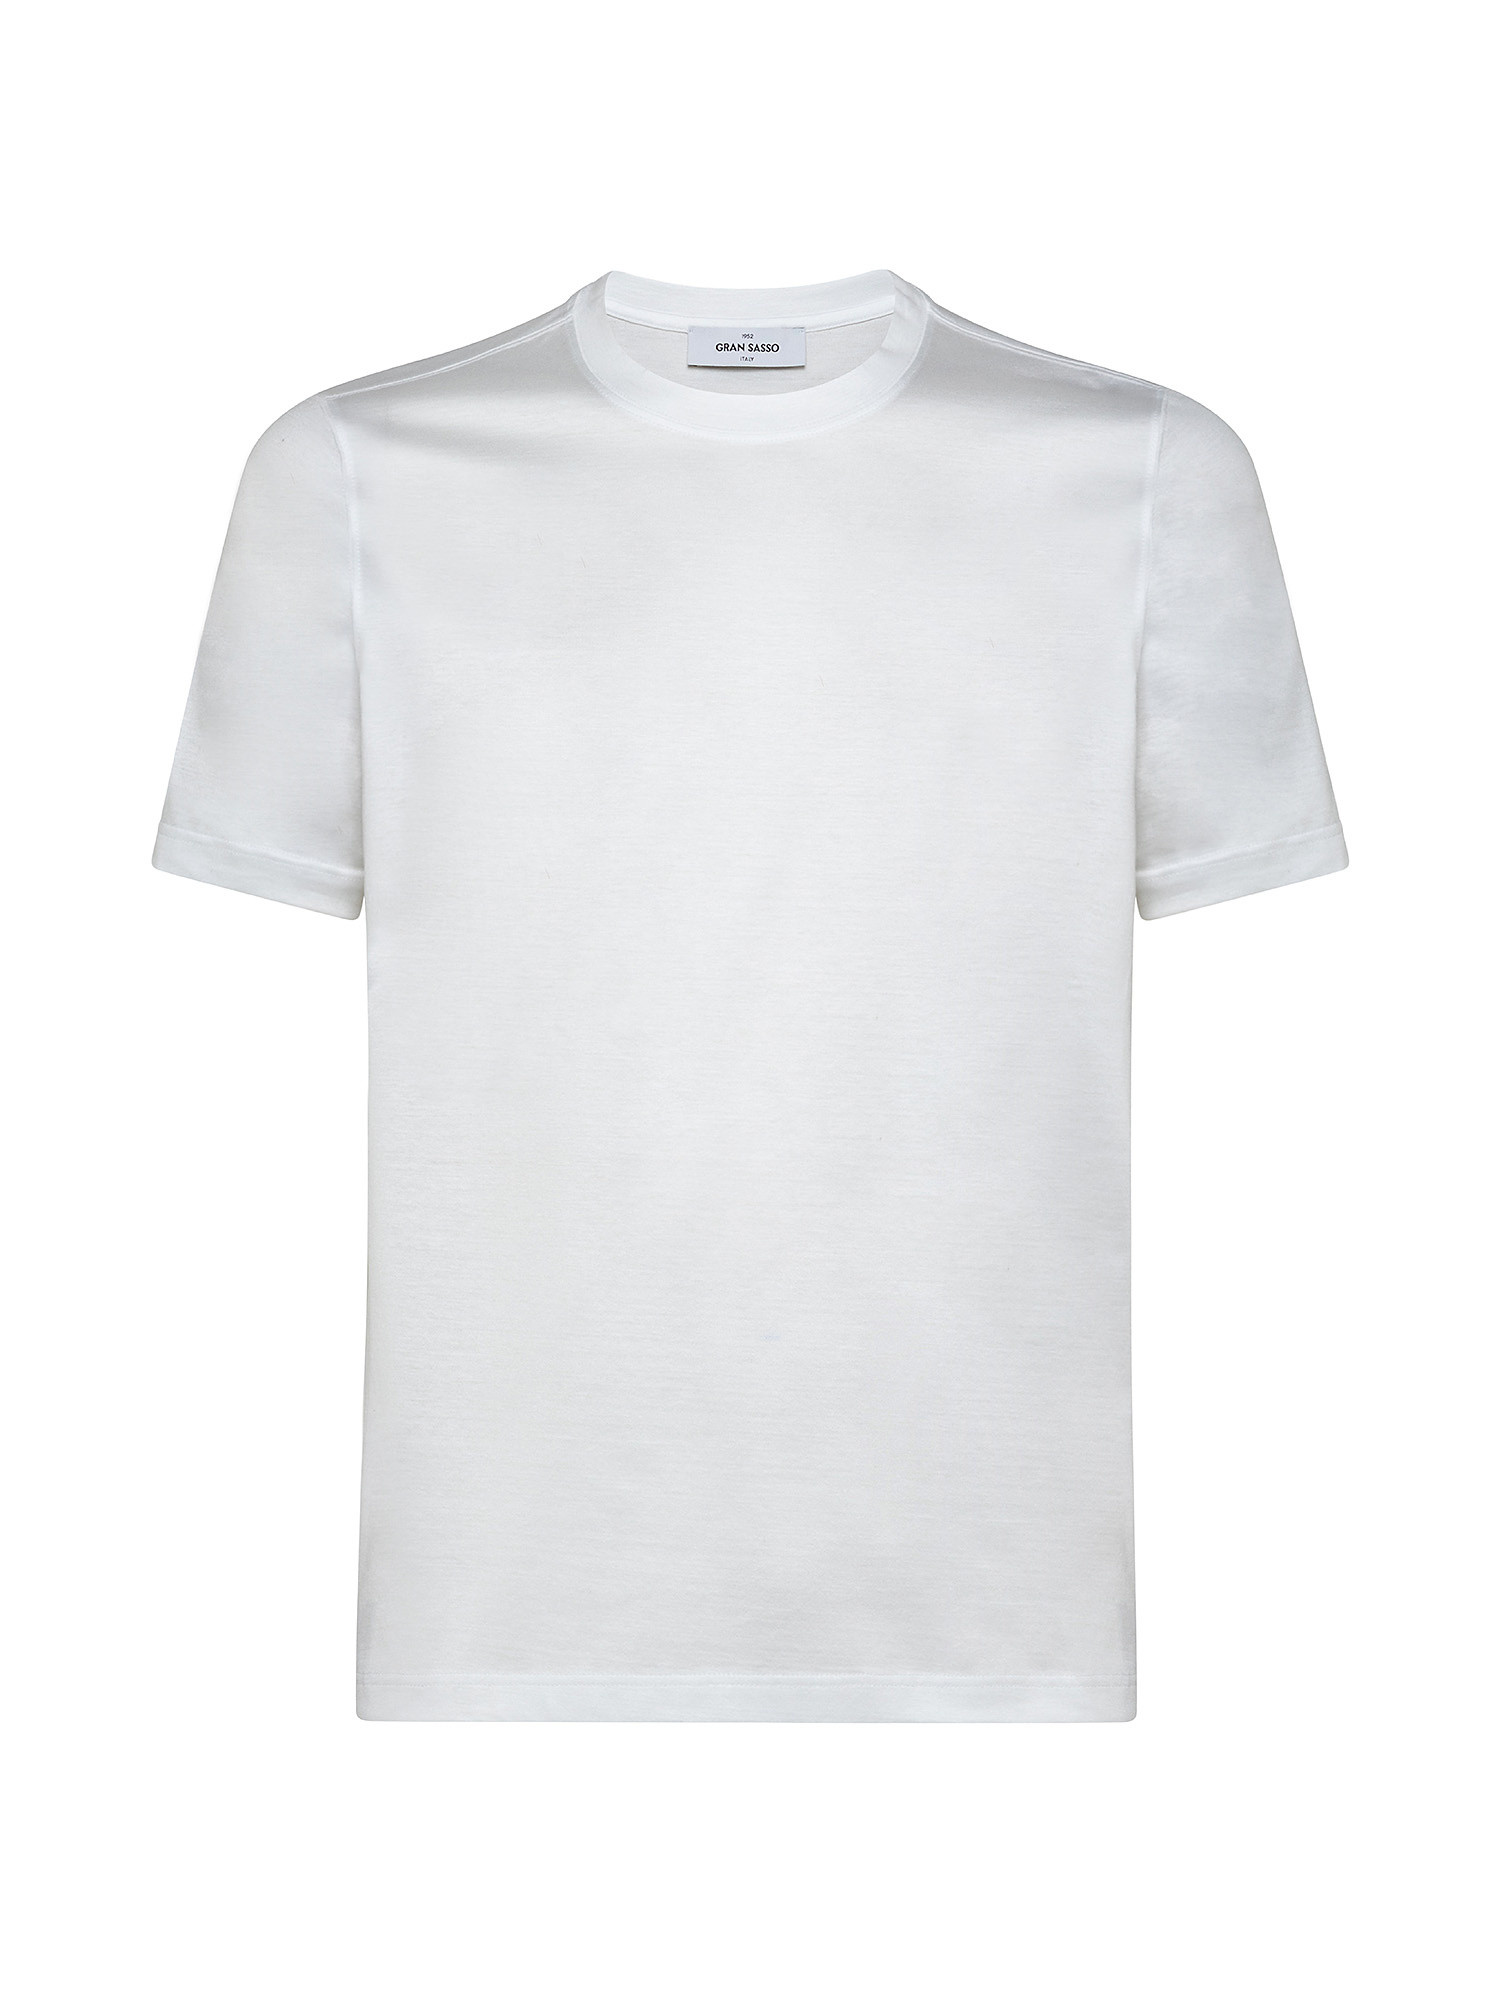 T-shirt girocollo manica corta, Bianco, large image number 0